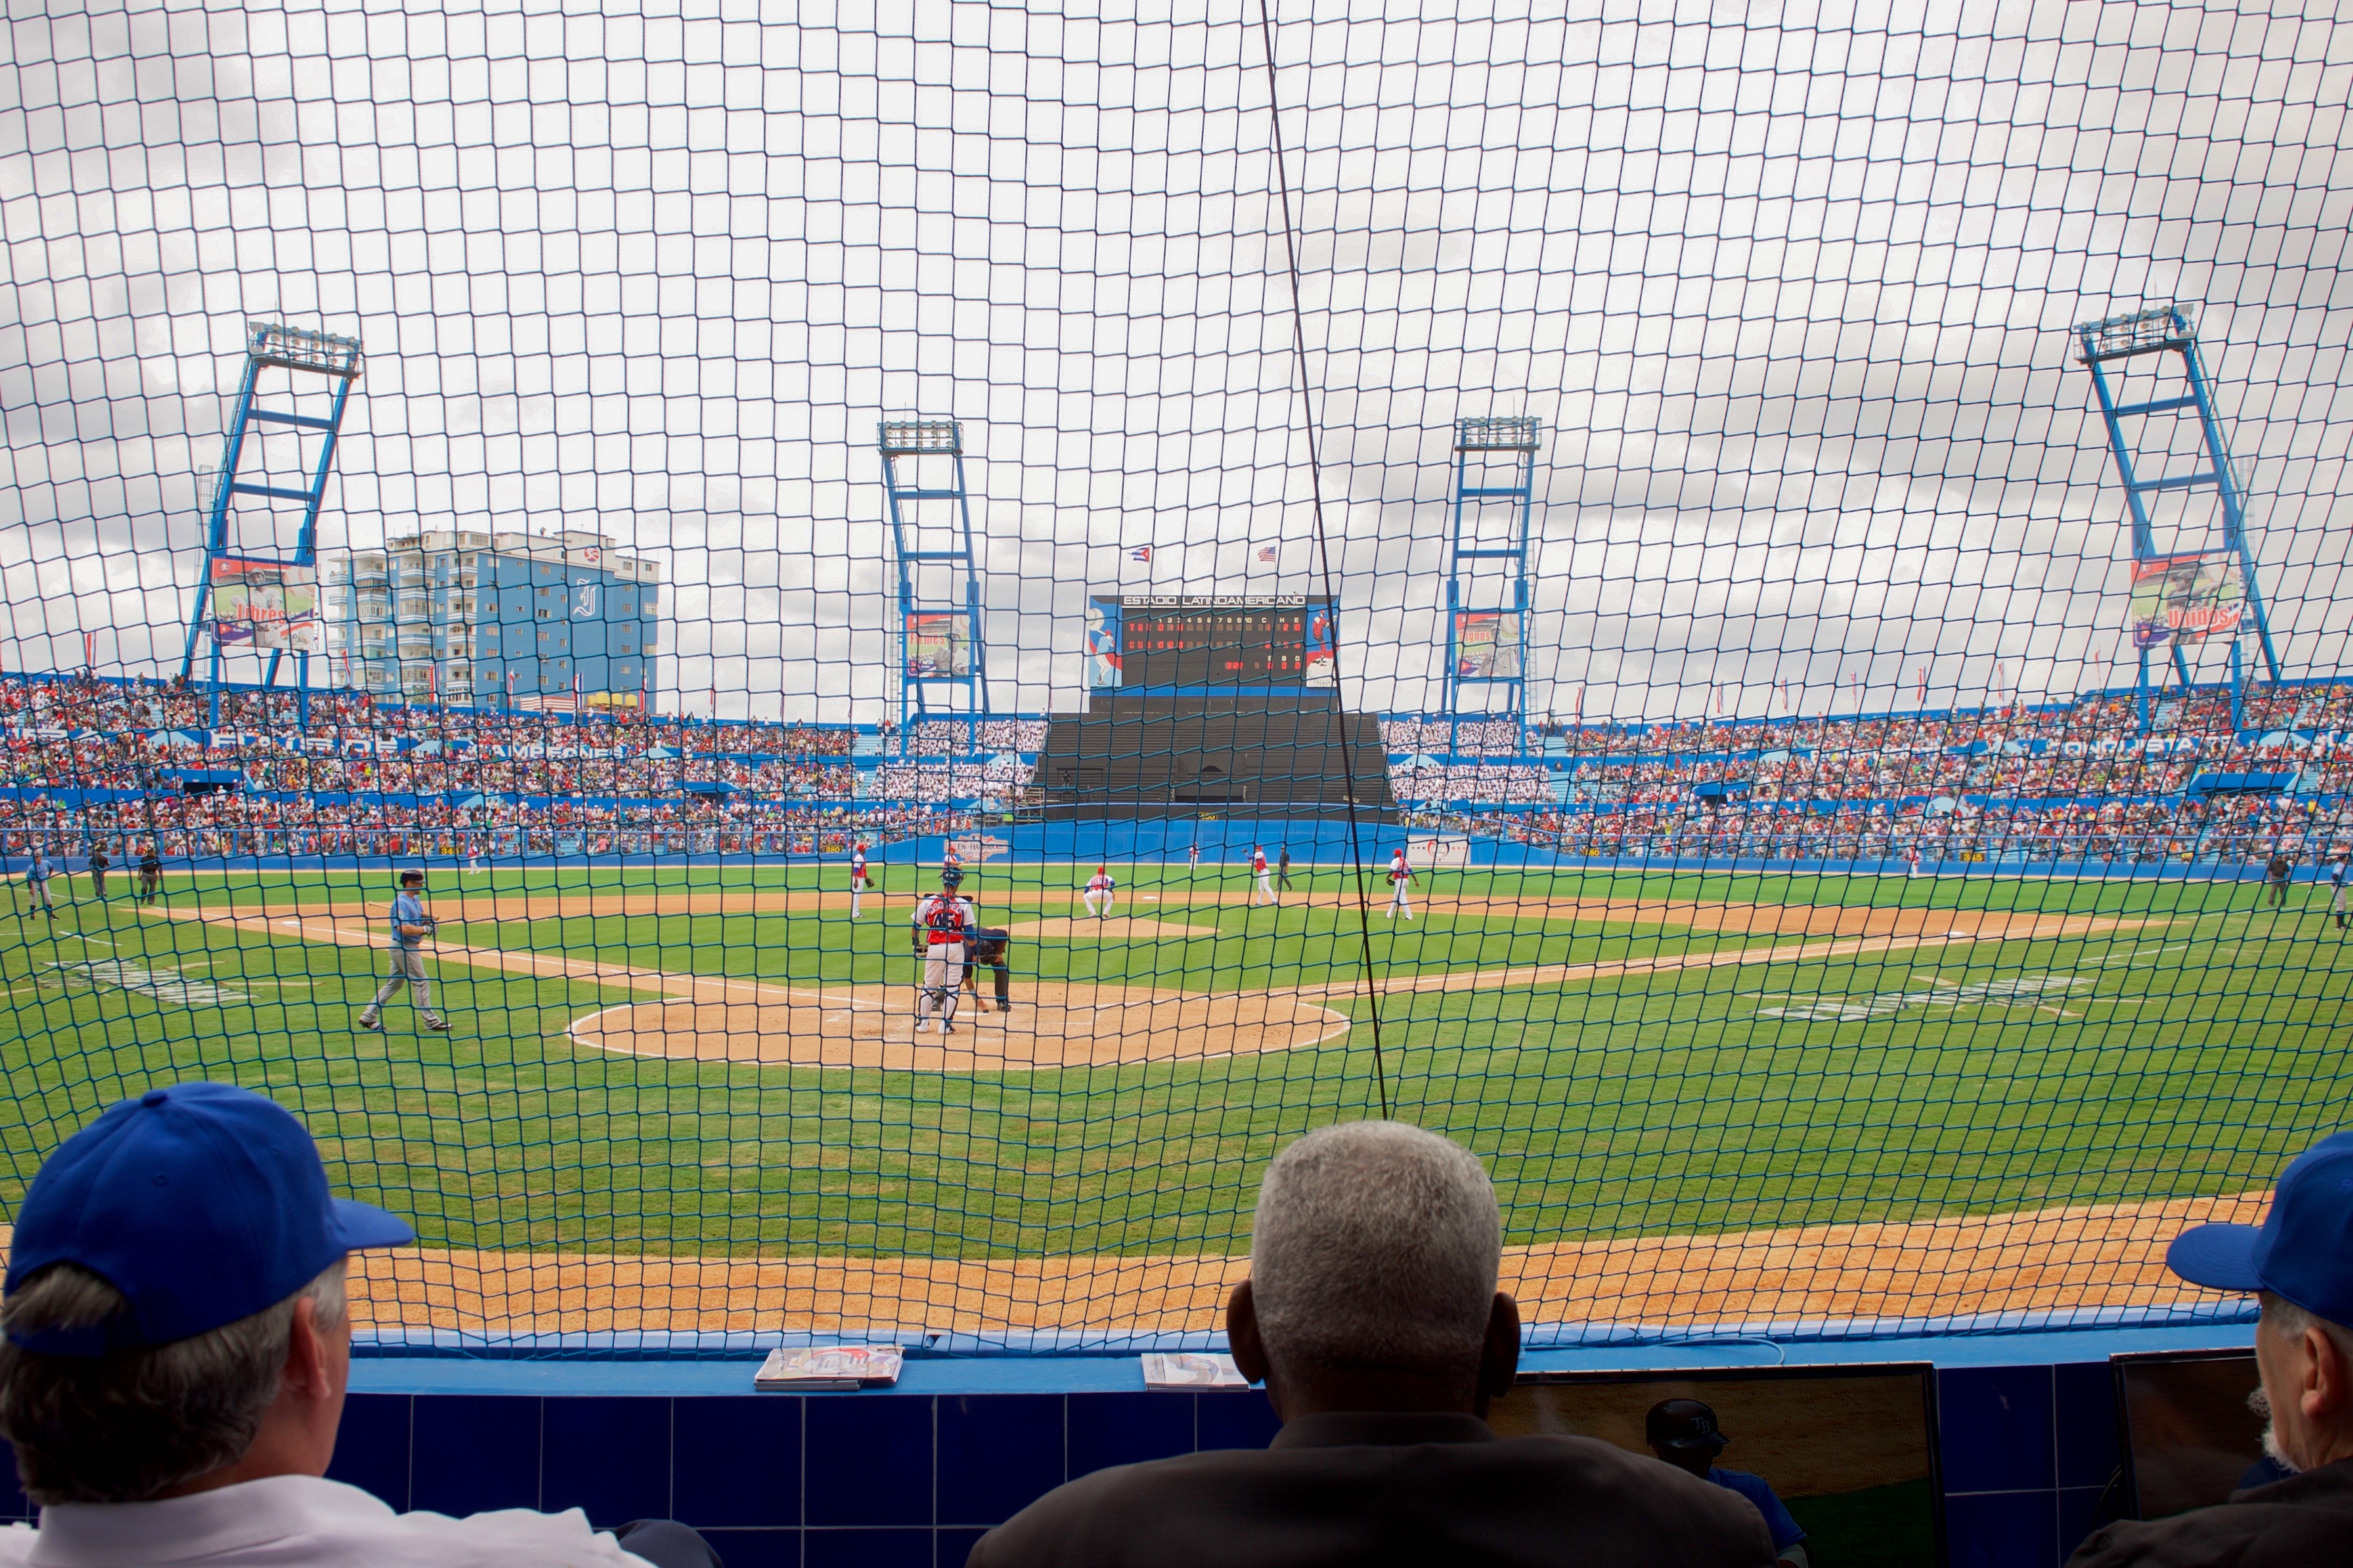 Cuba national baseball team - Wikipedia